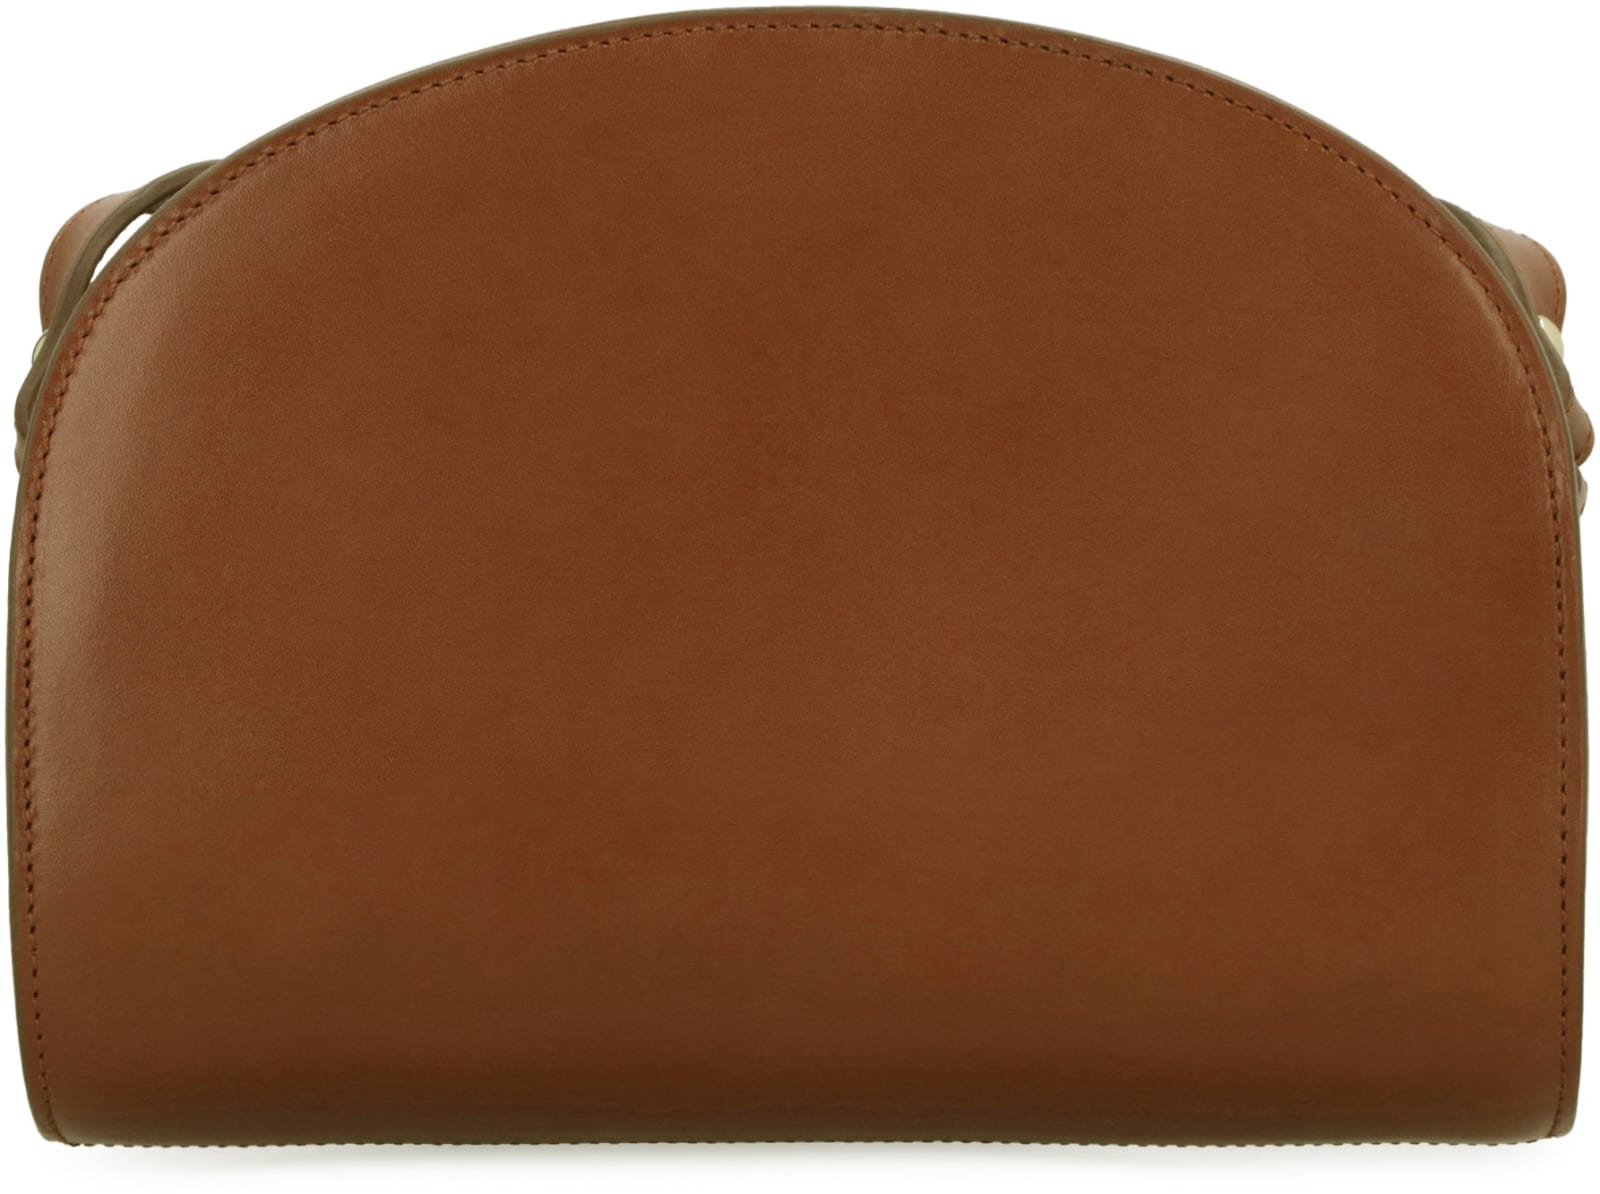 Shop Apc Demi-lune Leather Crossbody Bag In Brown